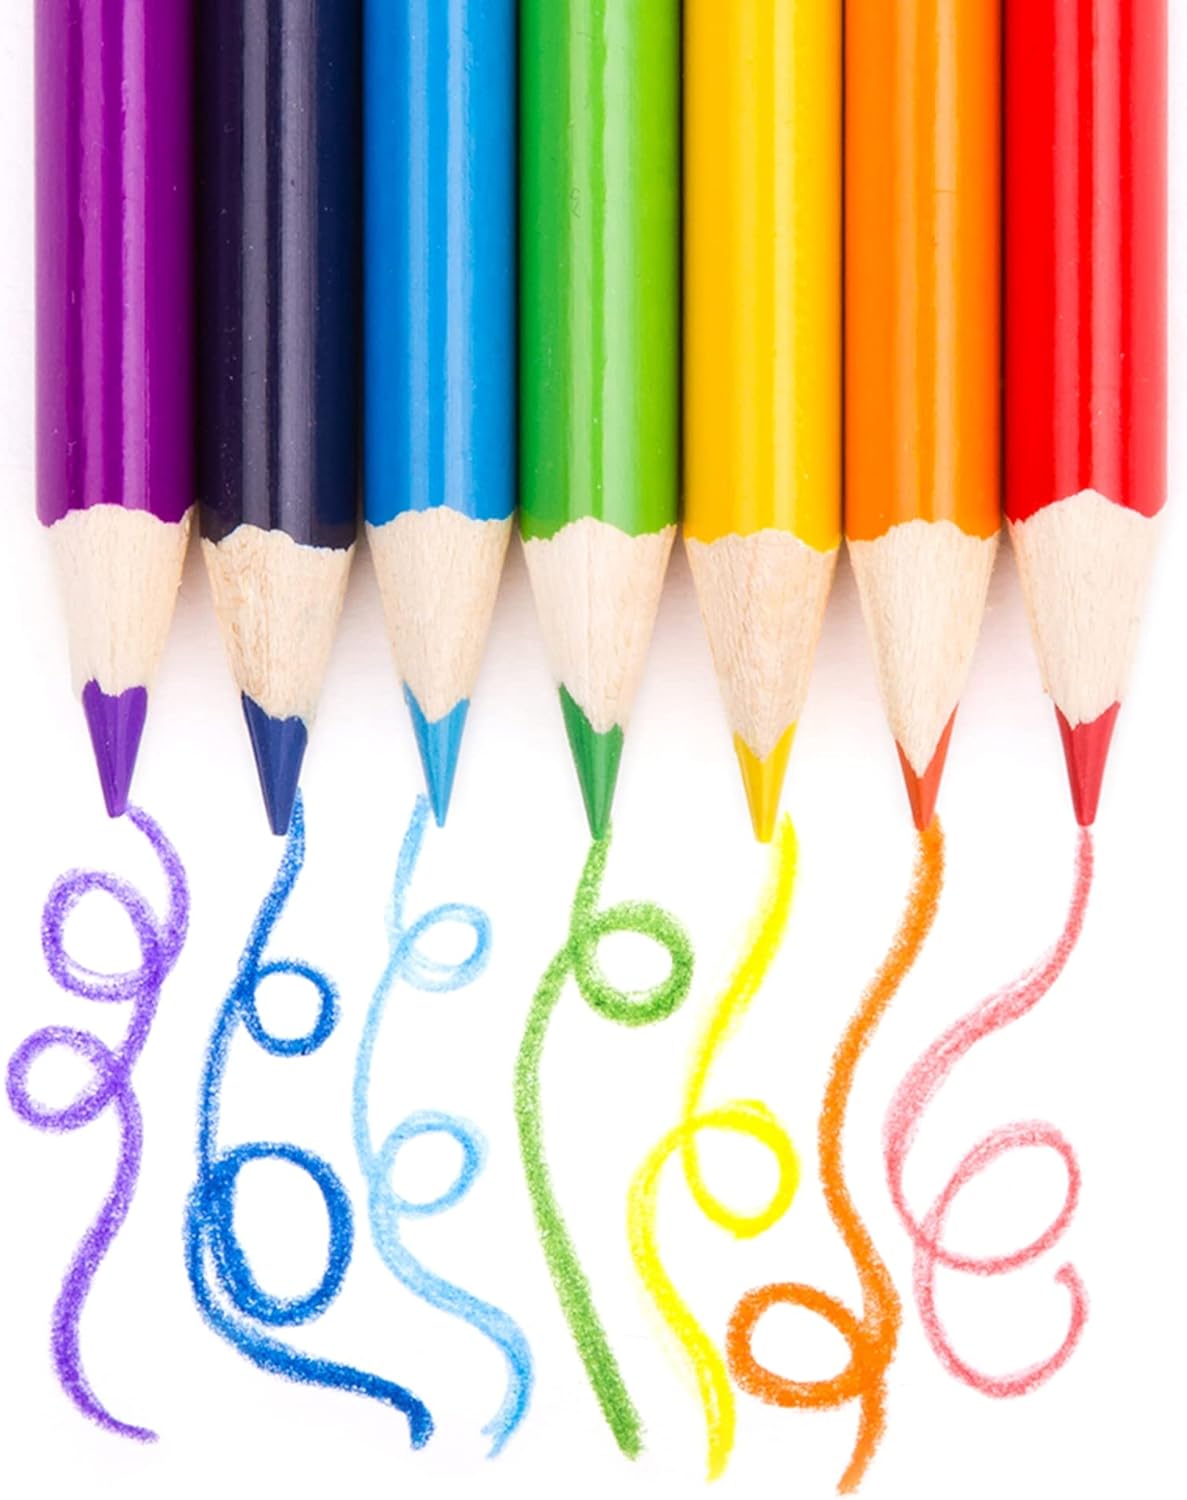 Cra-Z-Art Coloured Pencils (36 Piece Set)